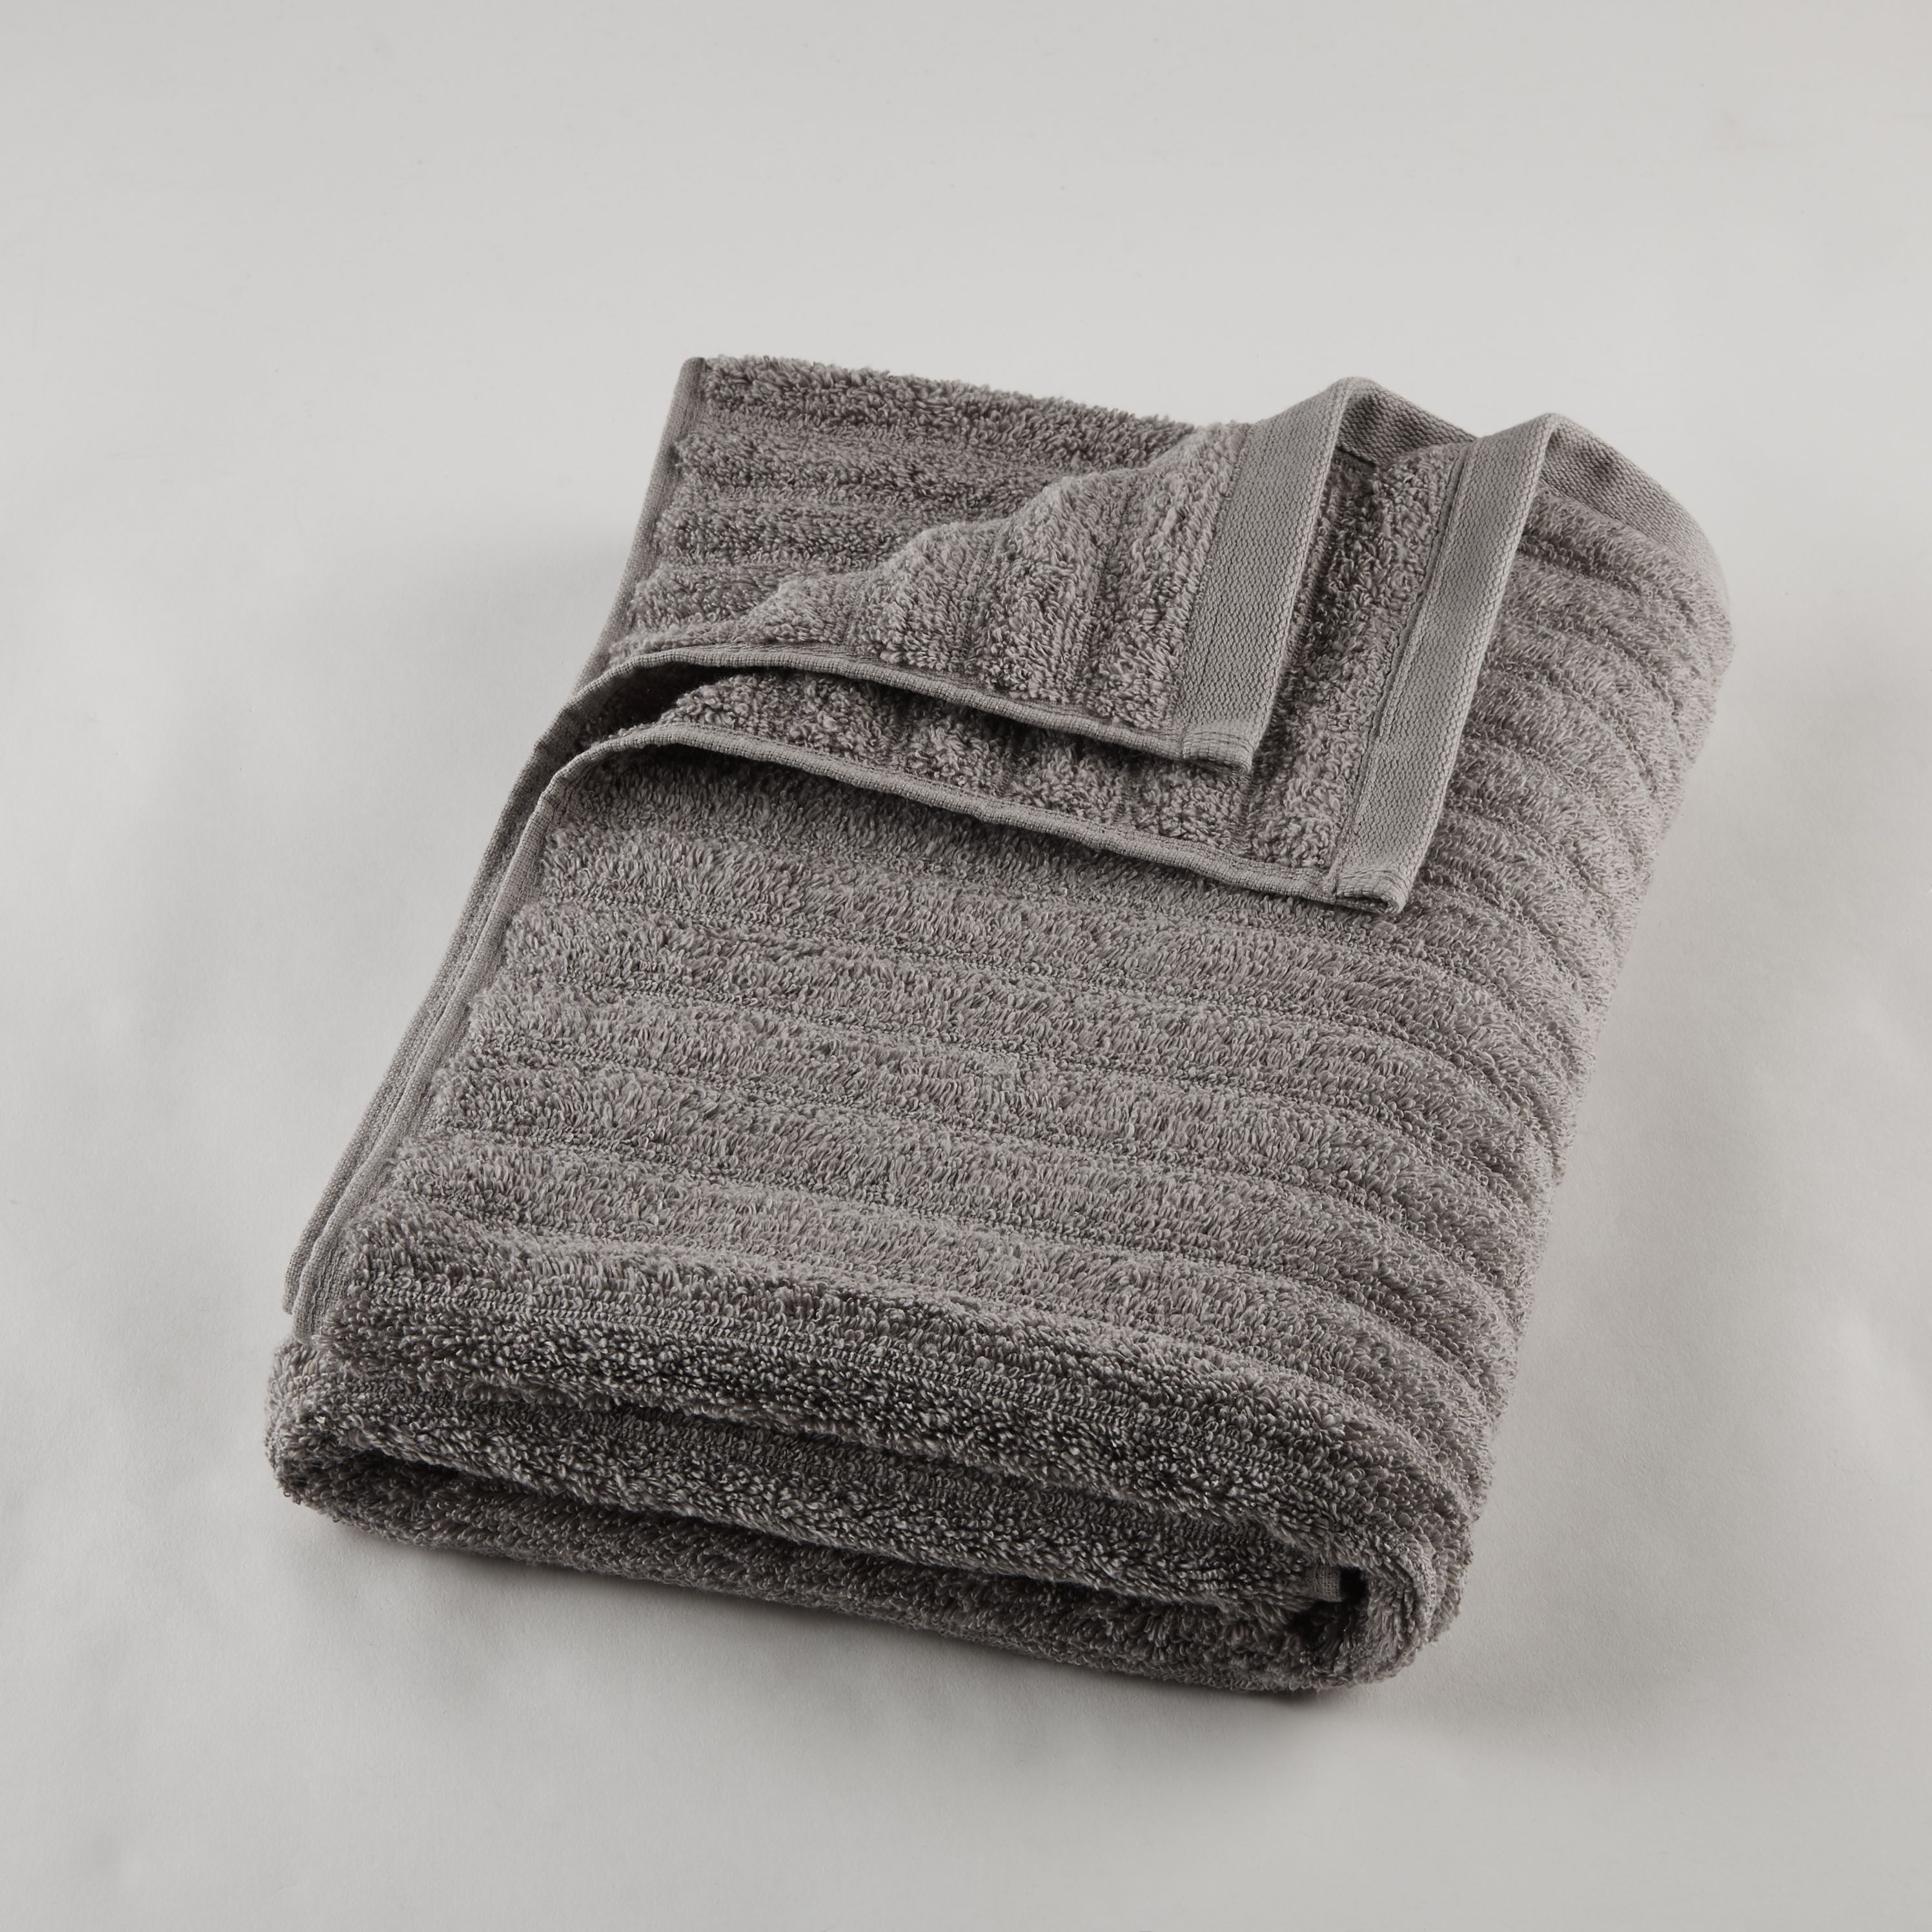 Mainstays Performance Textured 6-Piece Bath Towel Set - Grey Flannel - image 2 of 6